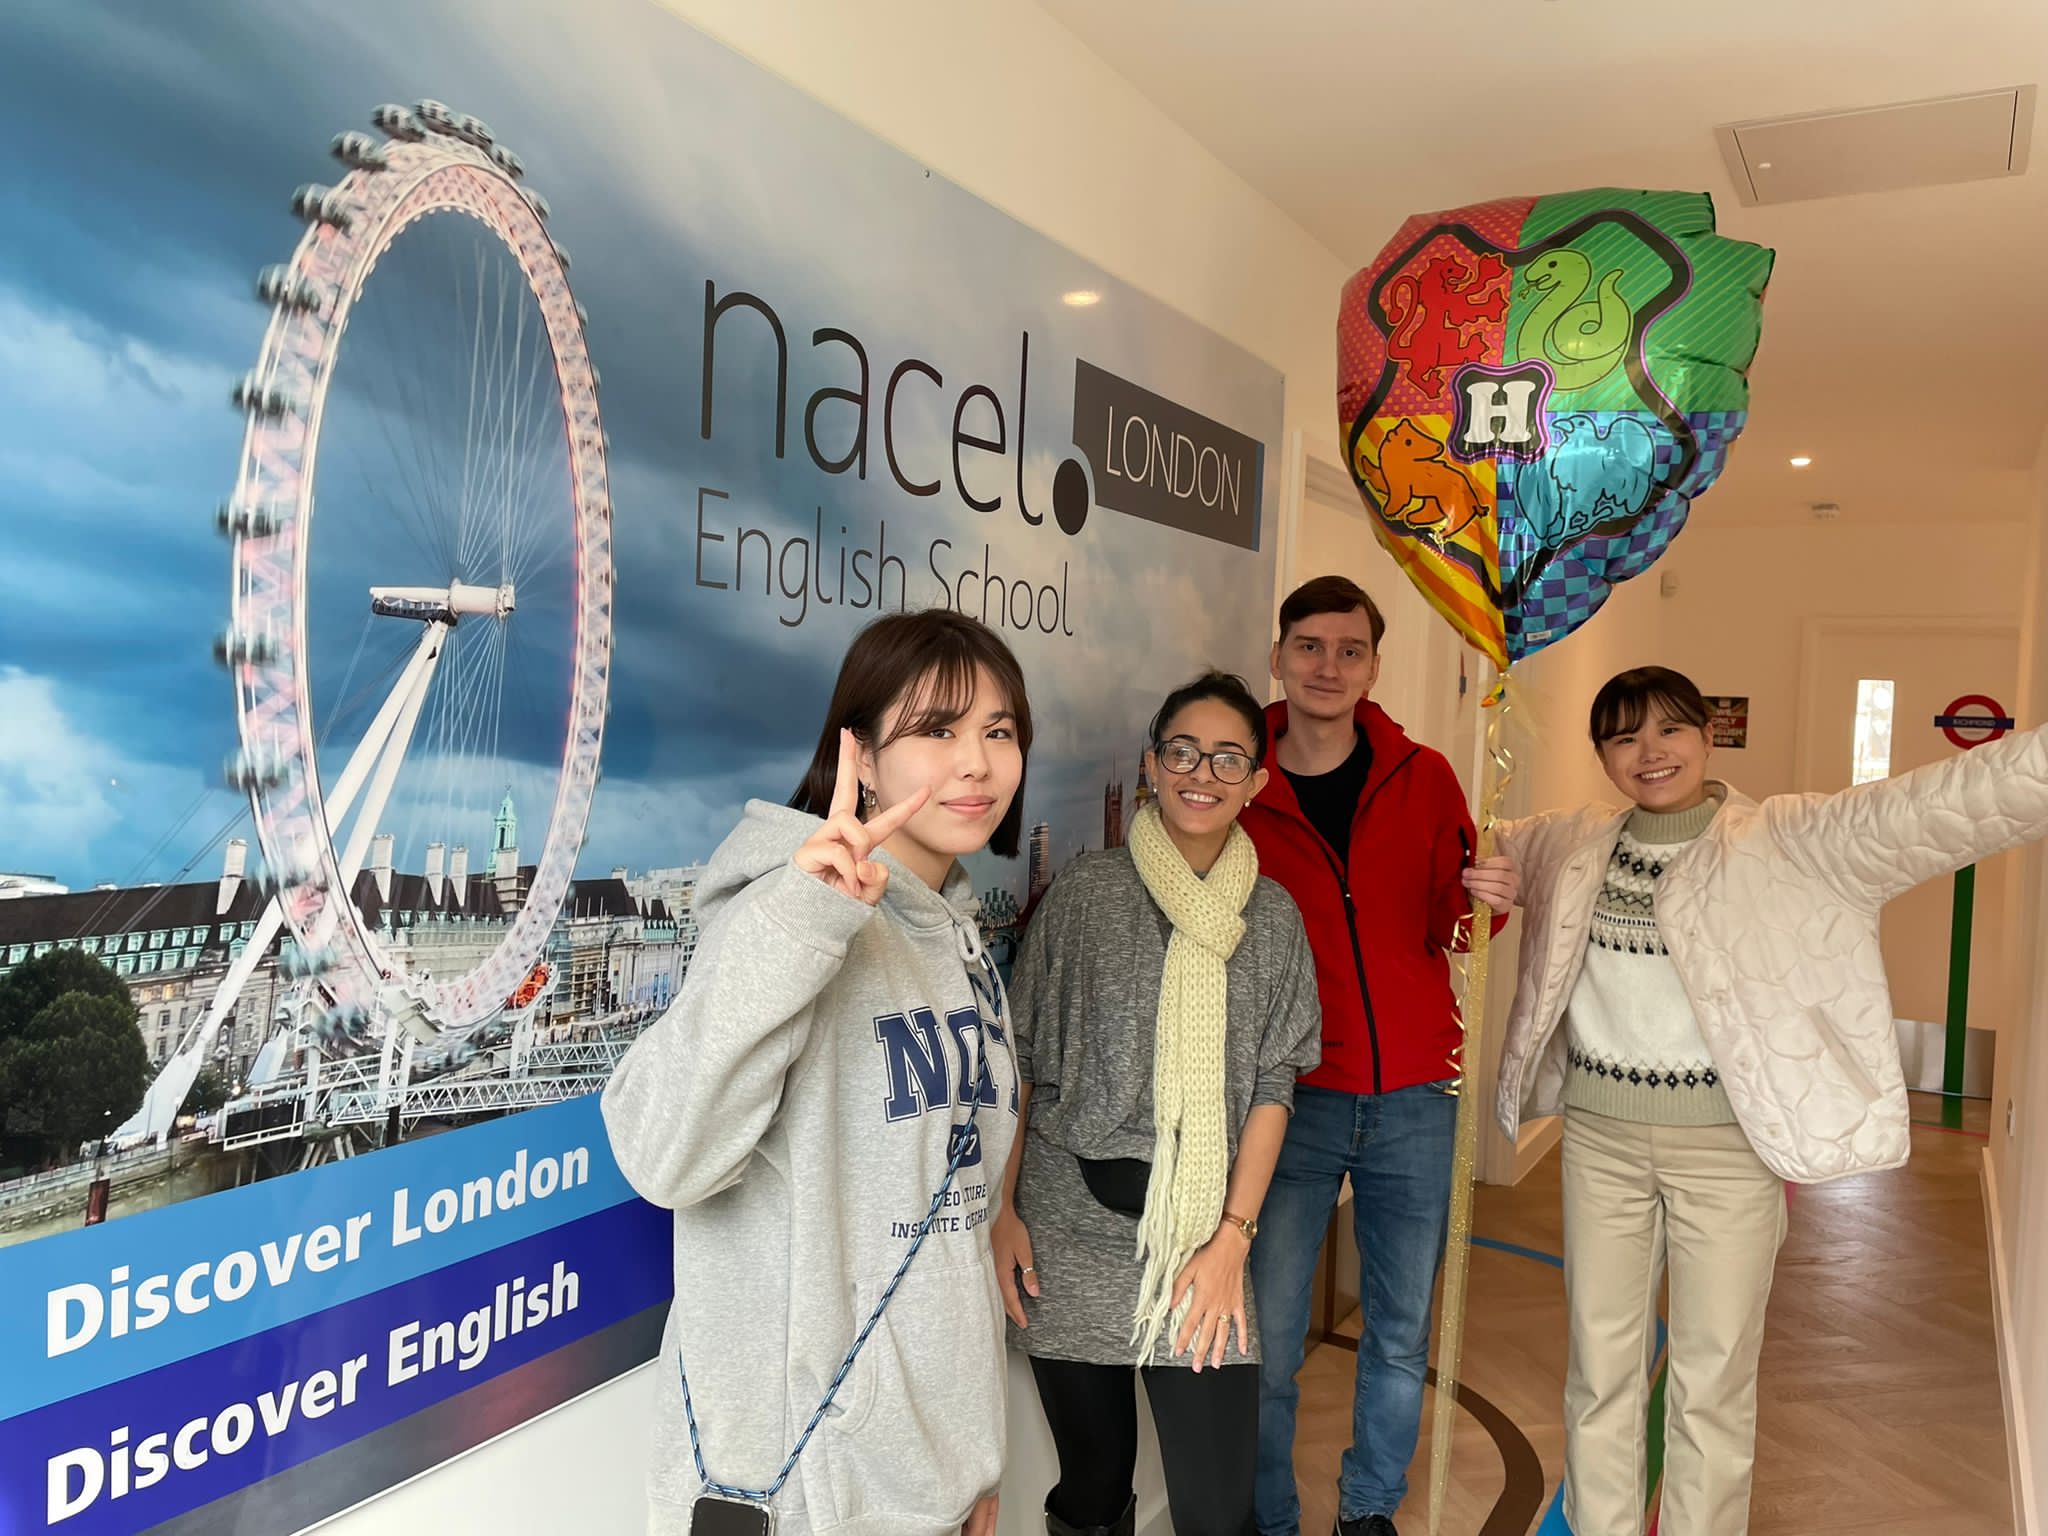 Testes TOEFL e IELTS - prepare o seu teste de inglês na Nacel English School London